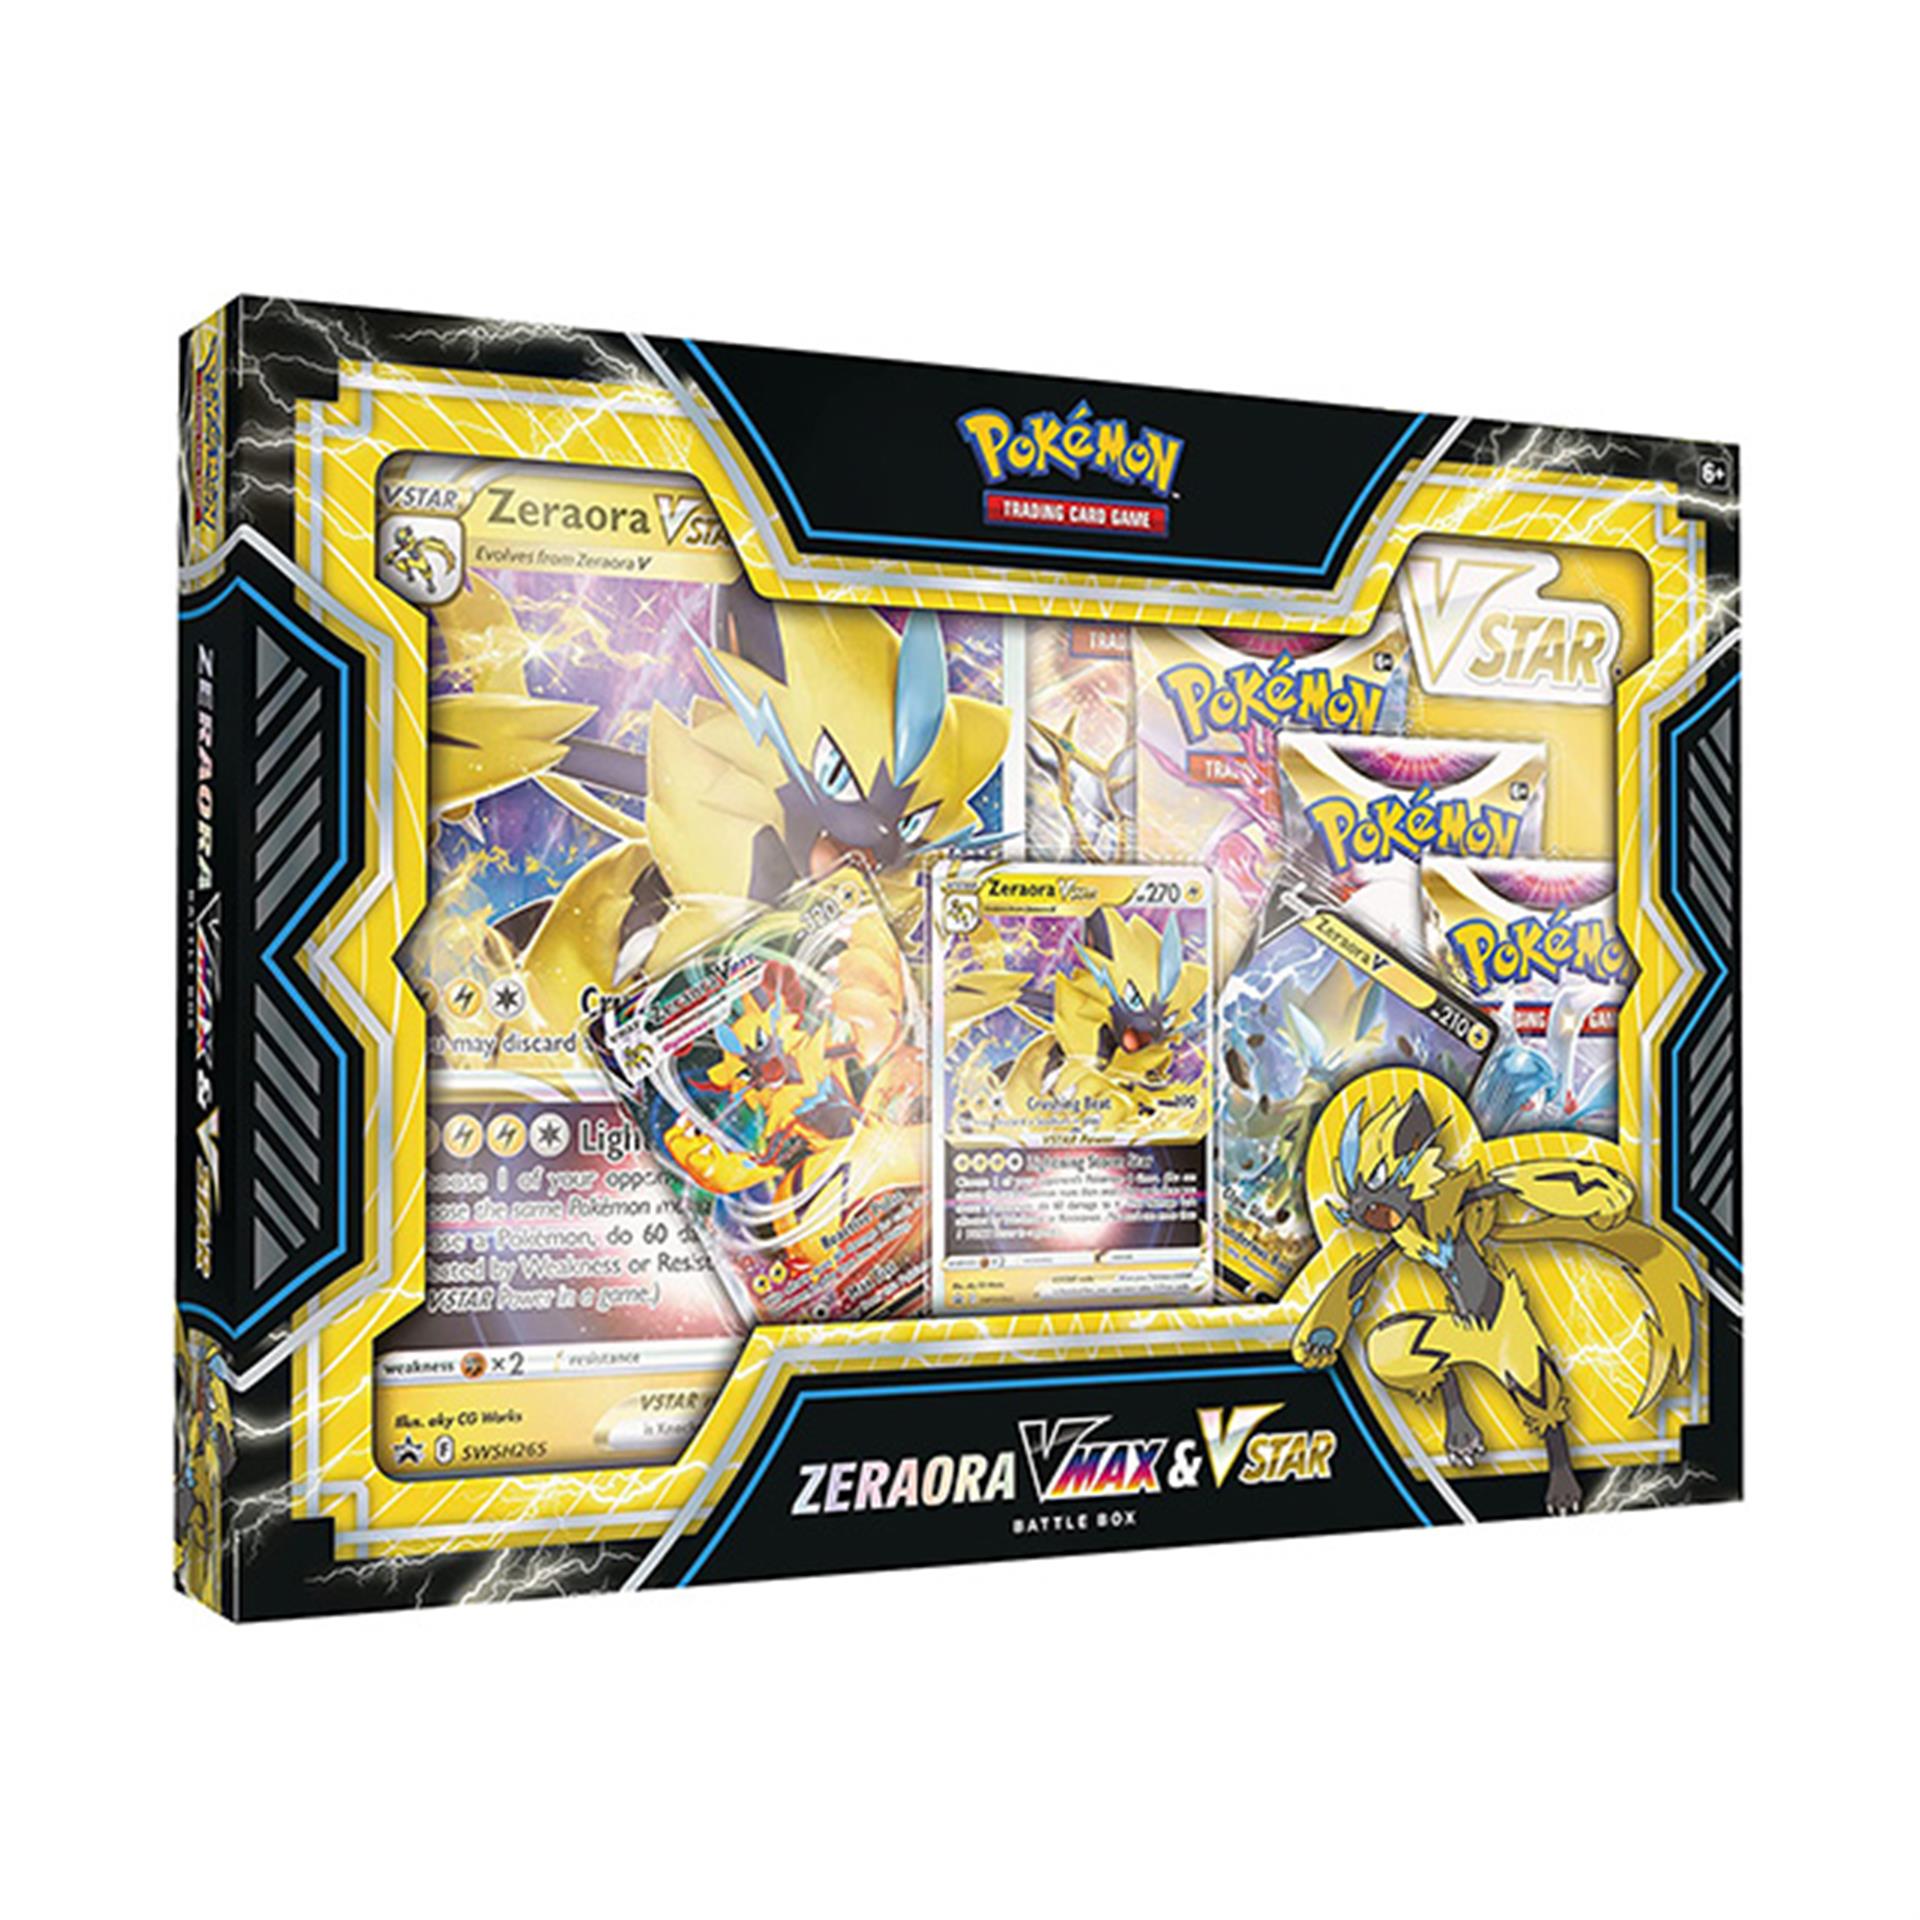 Pokémon Zeraora Battle Box VMAX & VSTAR